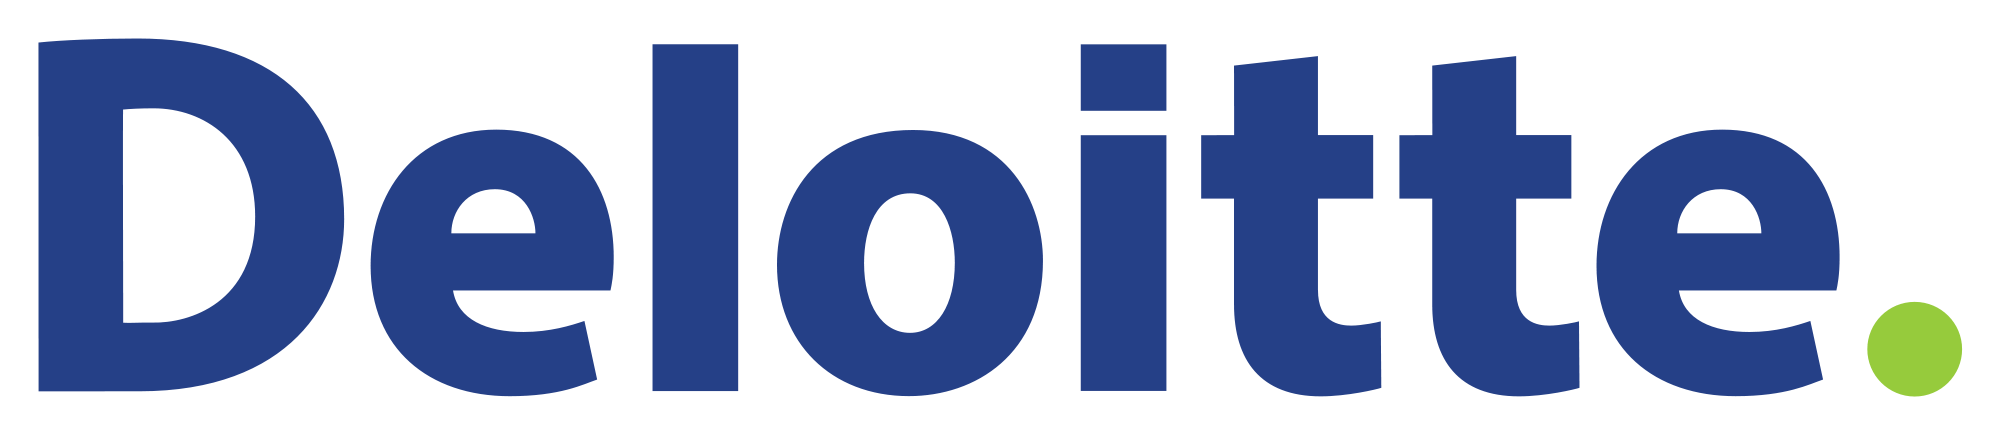 Deloitte Consulting Logo - deloitte